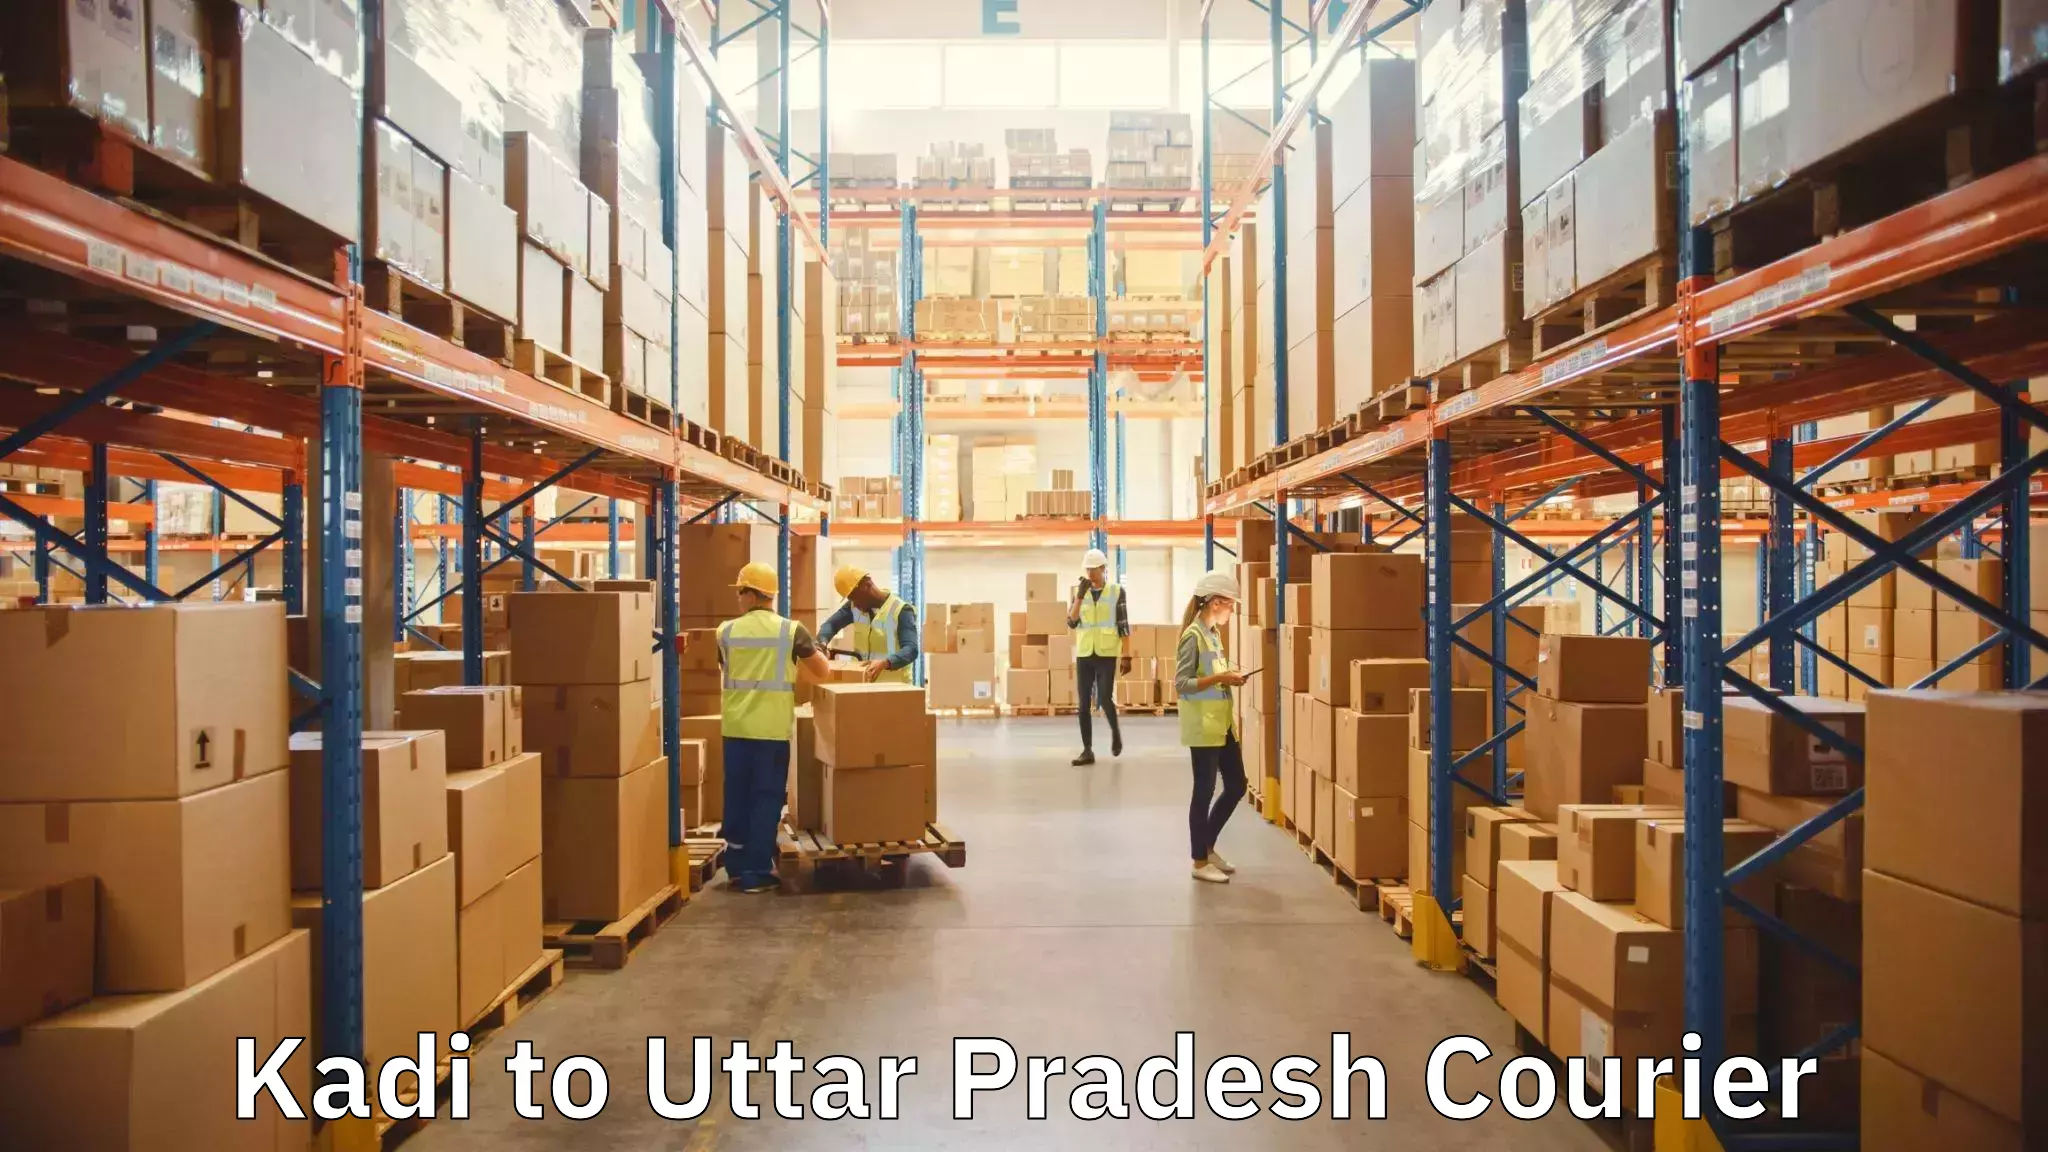 Efficient moving company Kadi to Lucknow